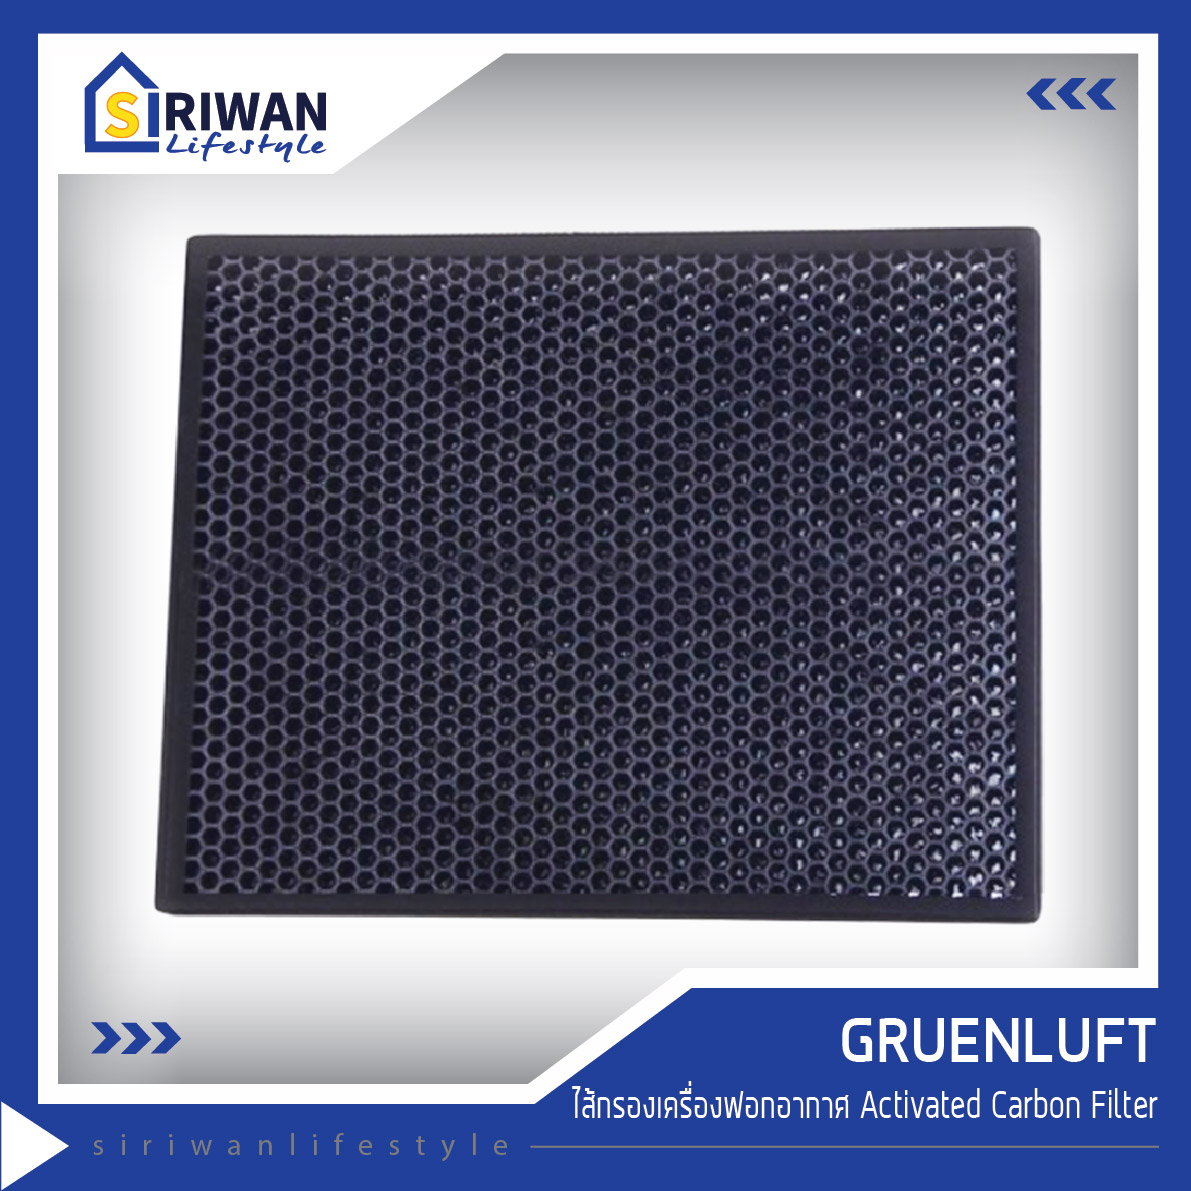 Gruenluft ไส้กรองเครื่องฟอกอากาศ Activated Carbon Filter รุ่น VK-S60062